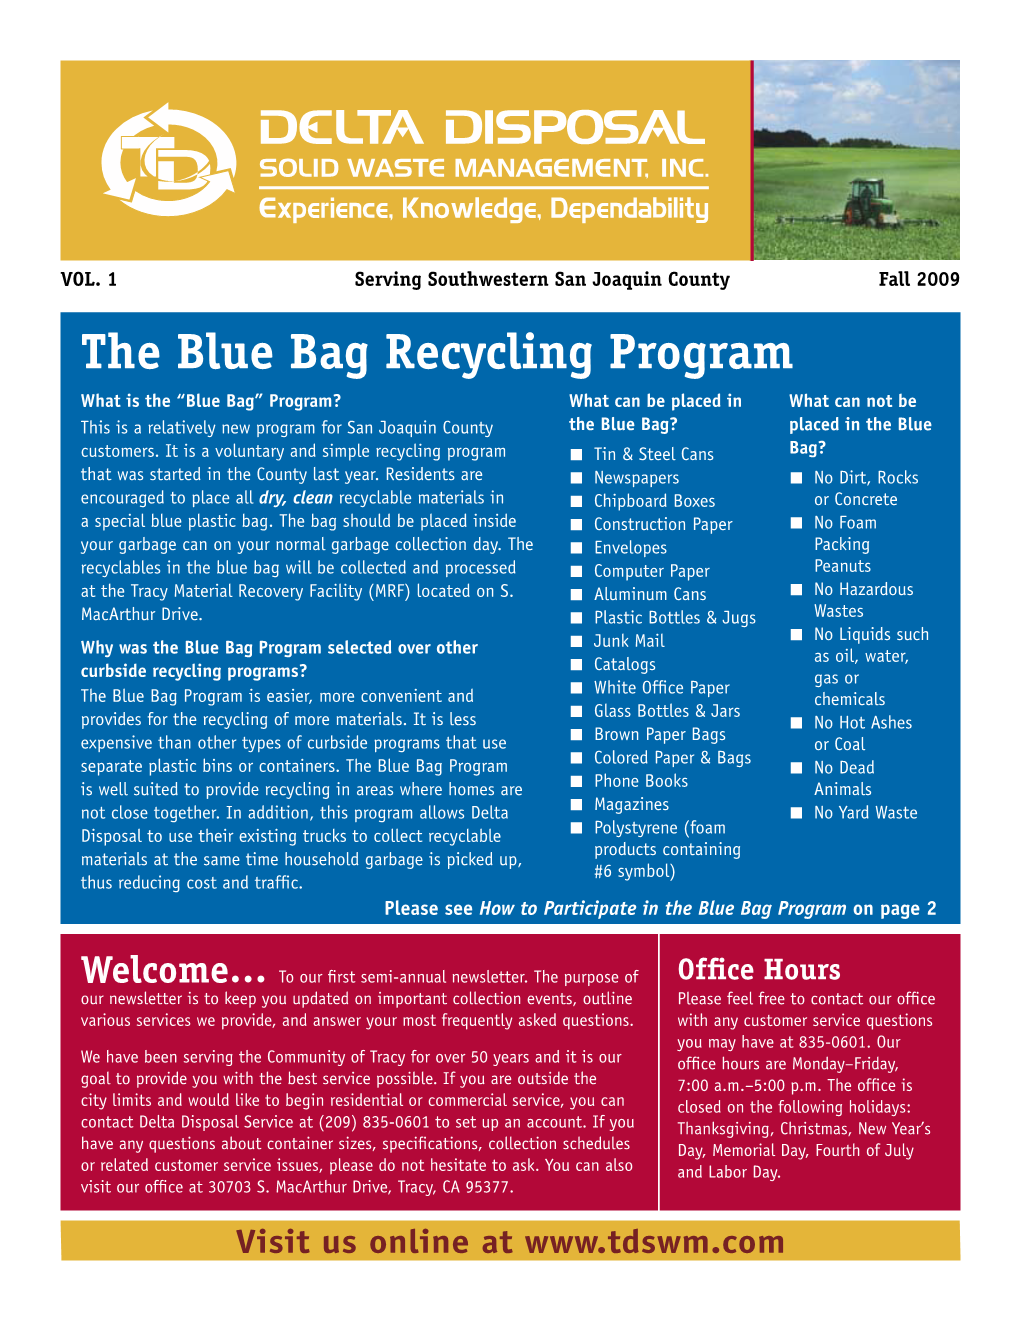 The Blue Bag Recycling Program